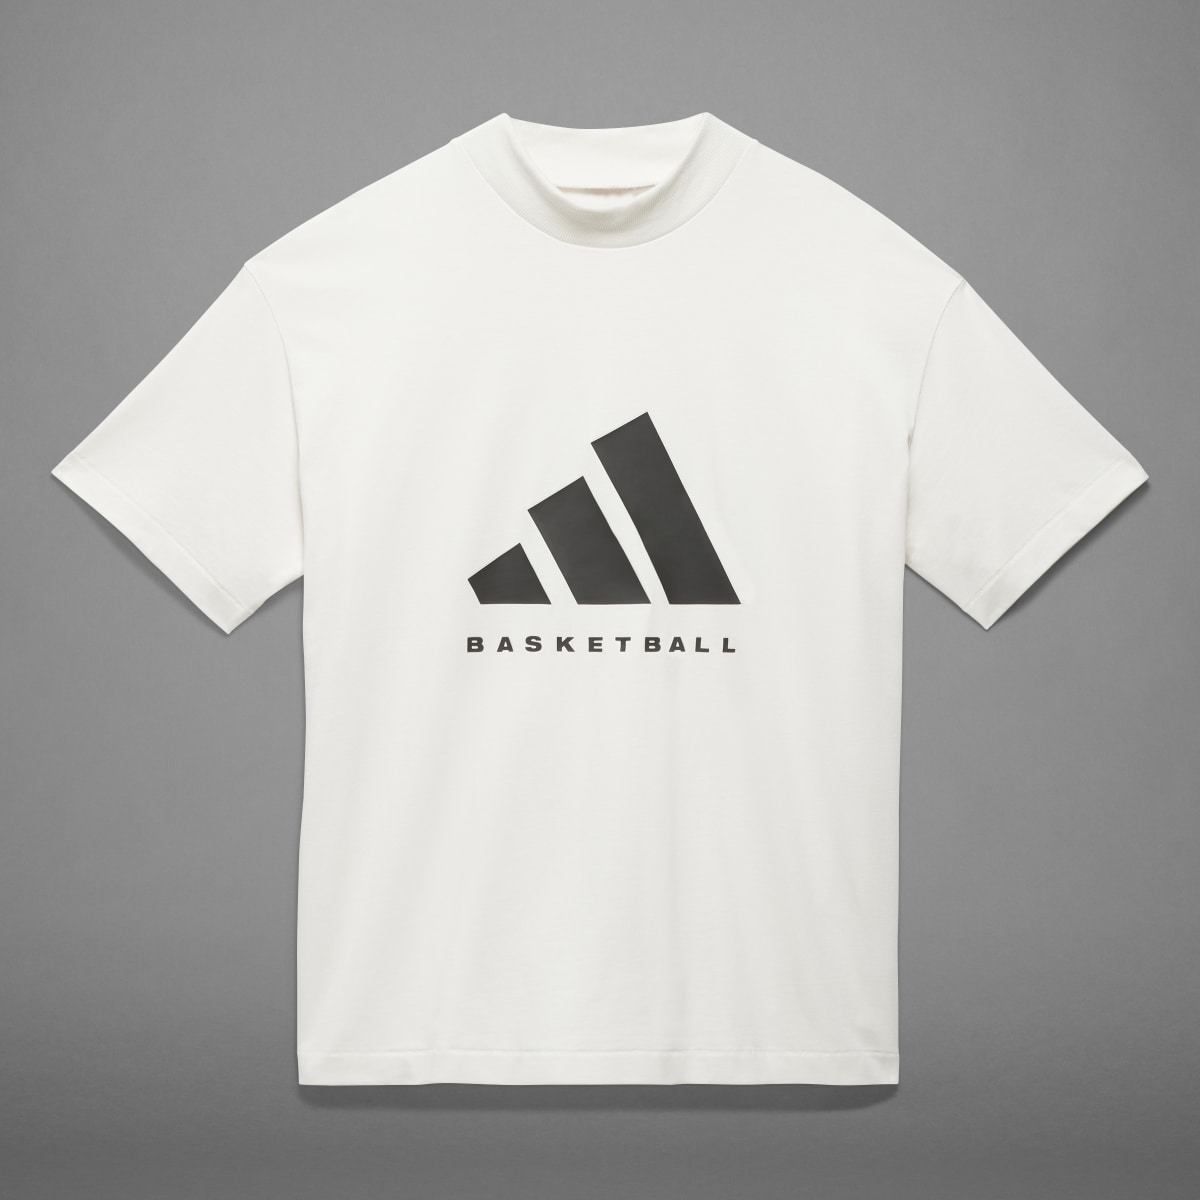 Adidas Basketball T-Shirt. 10